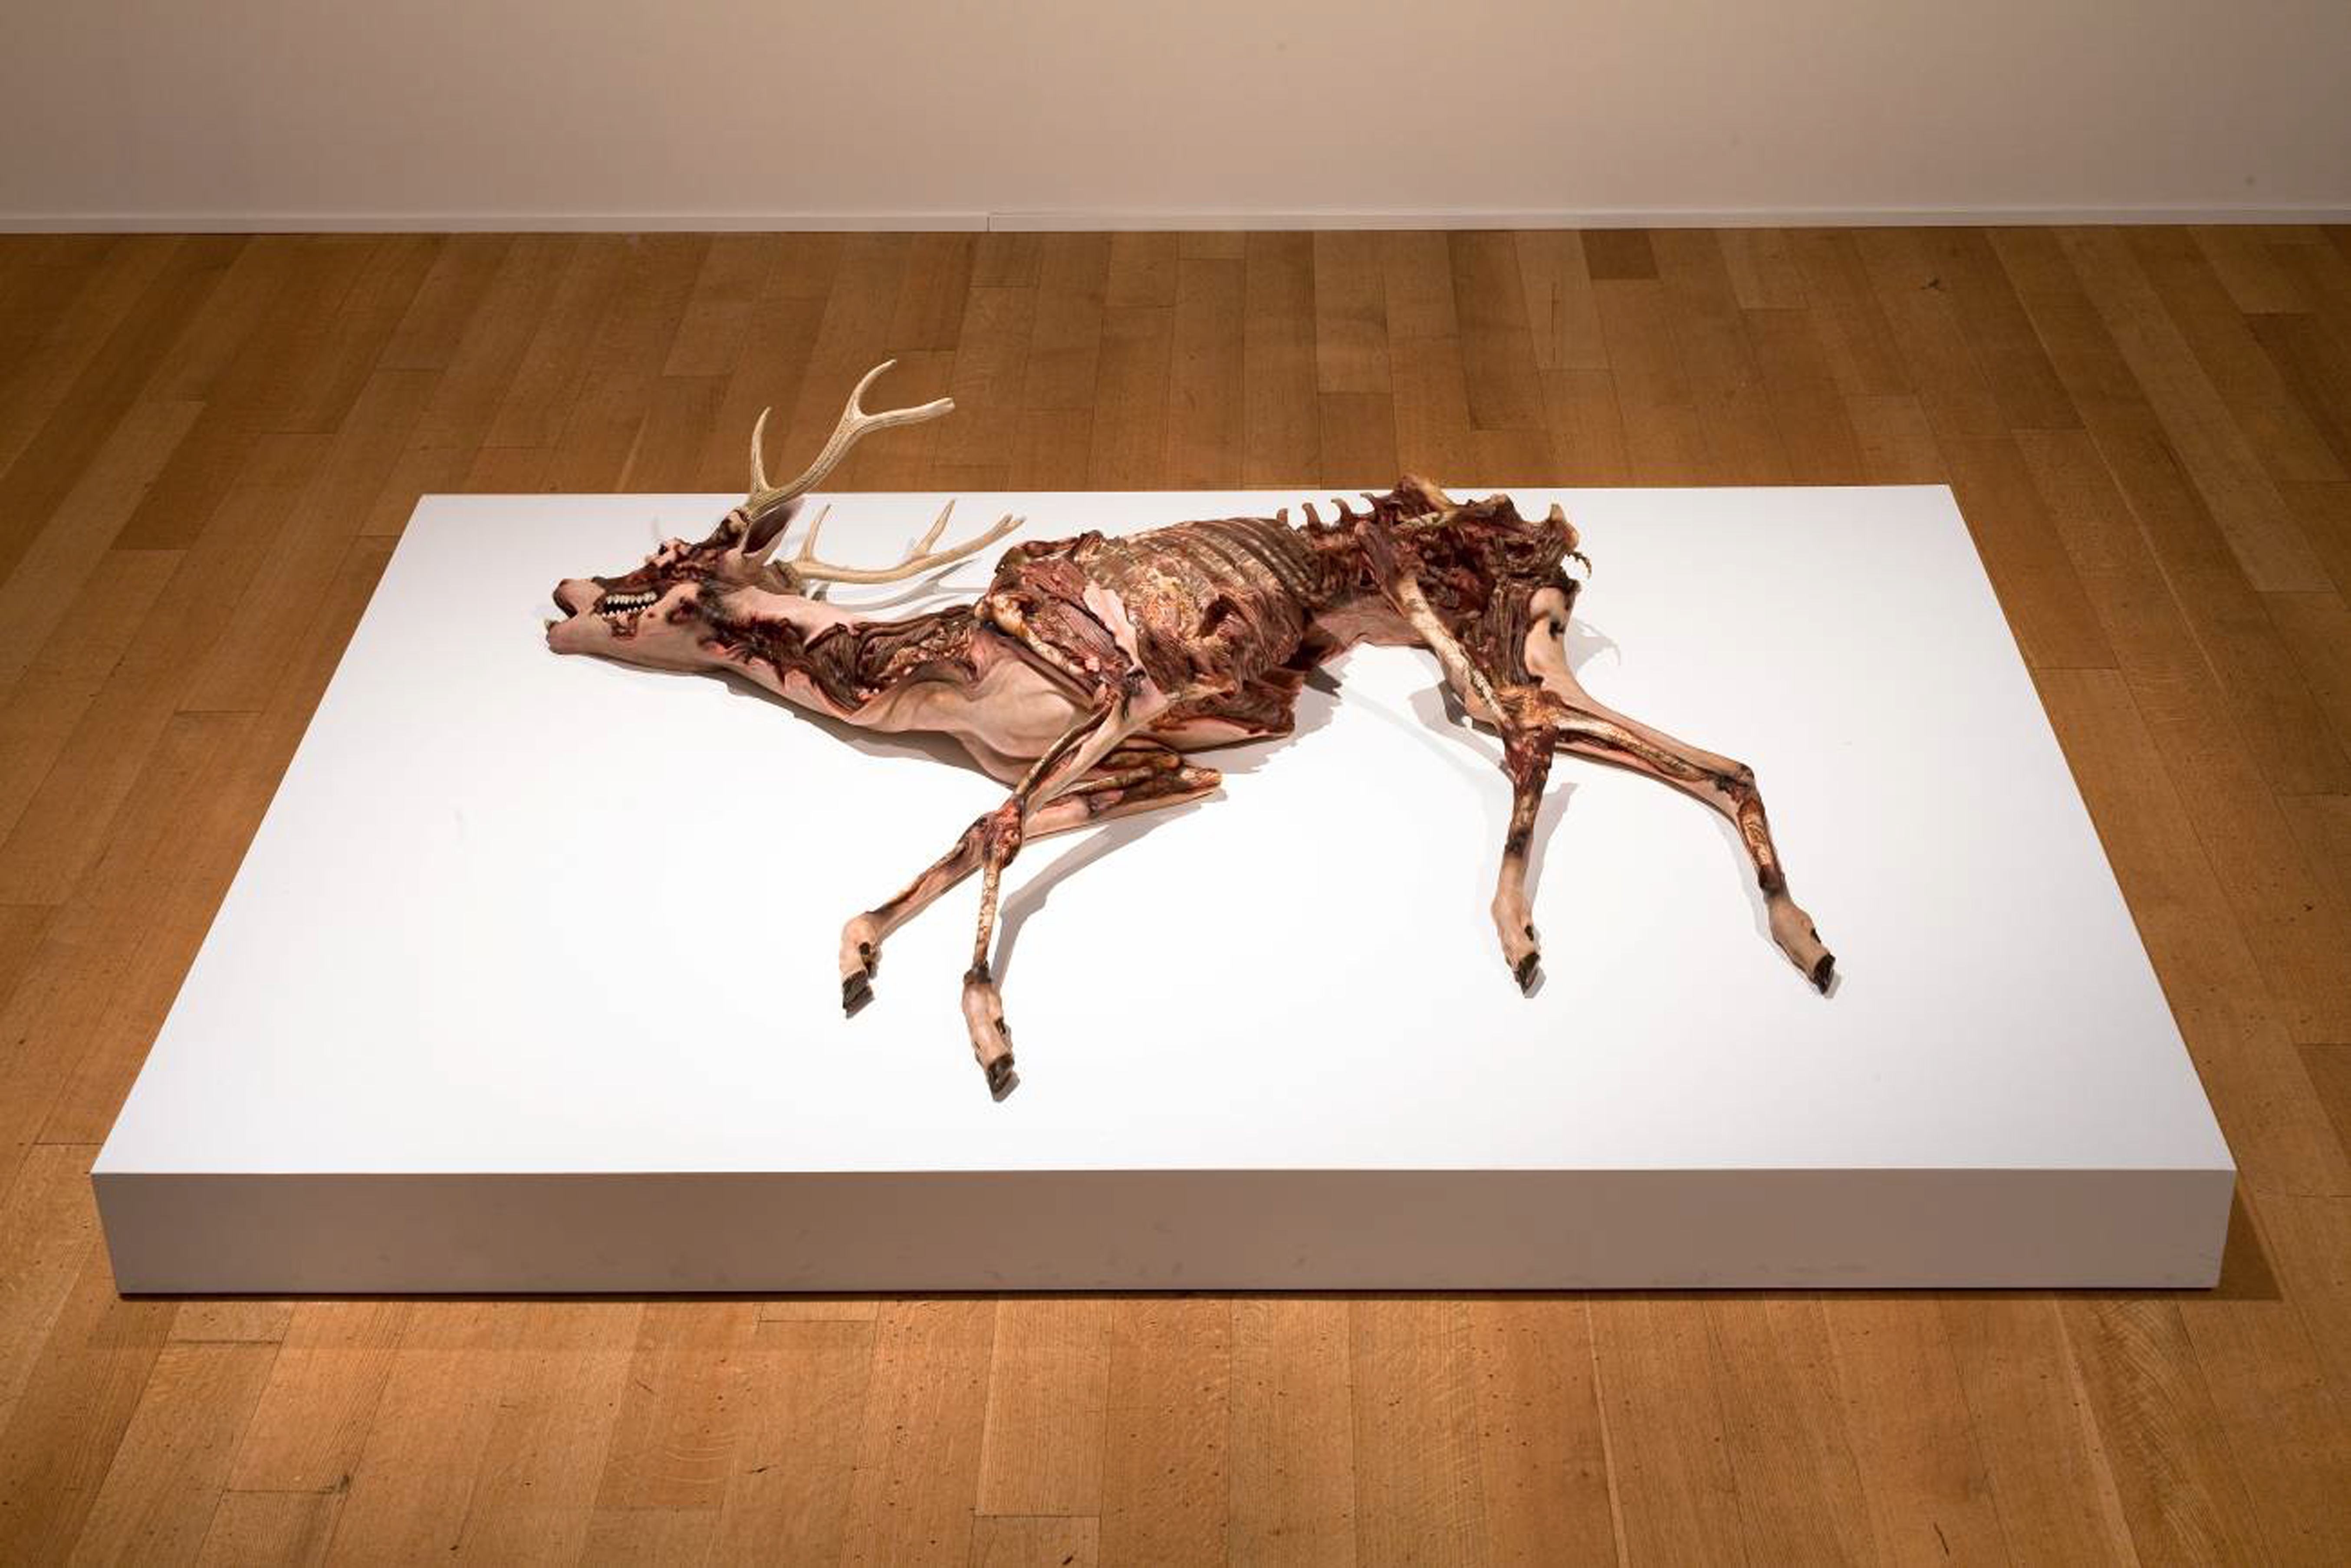 Dallas artist Erick Swenson’s exhibition at the Nasher Sculpture Center